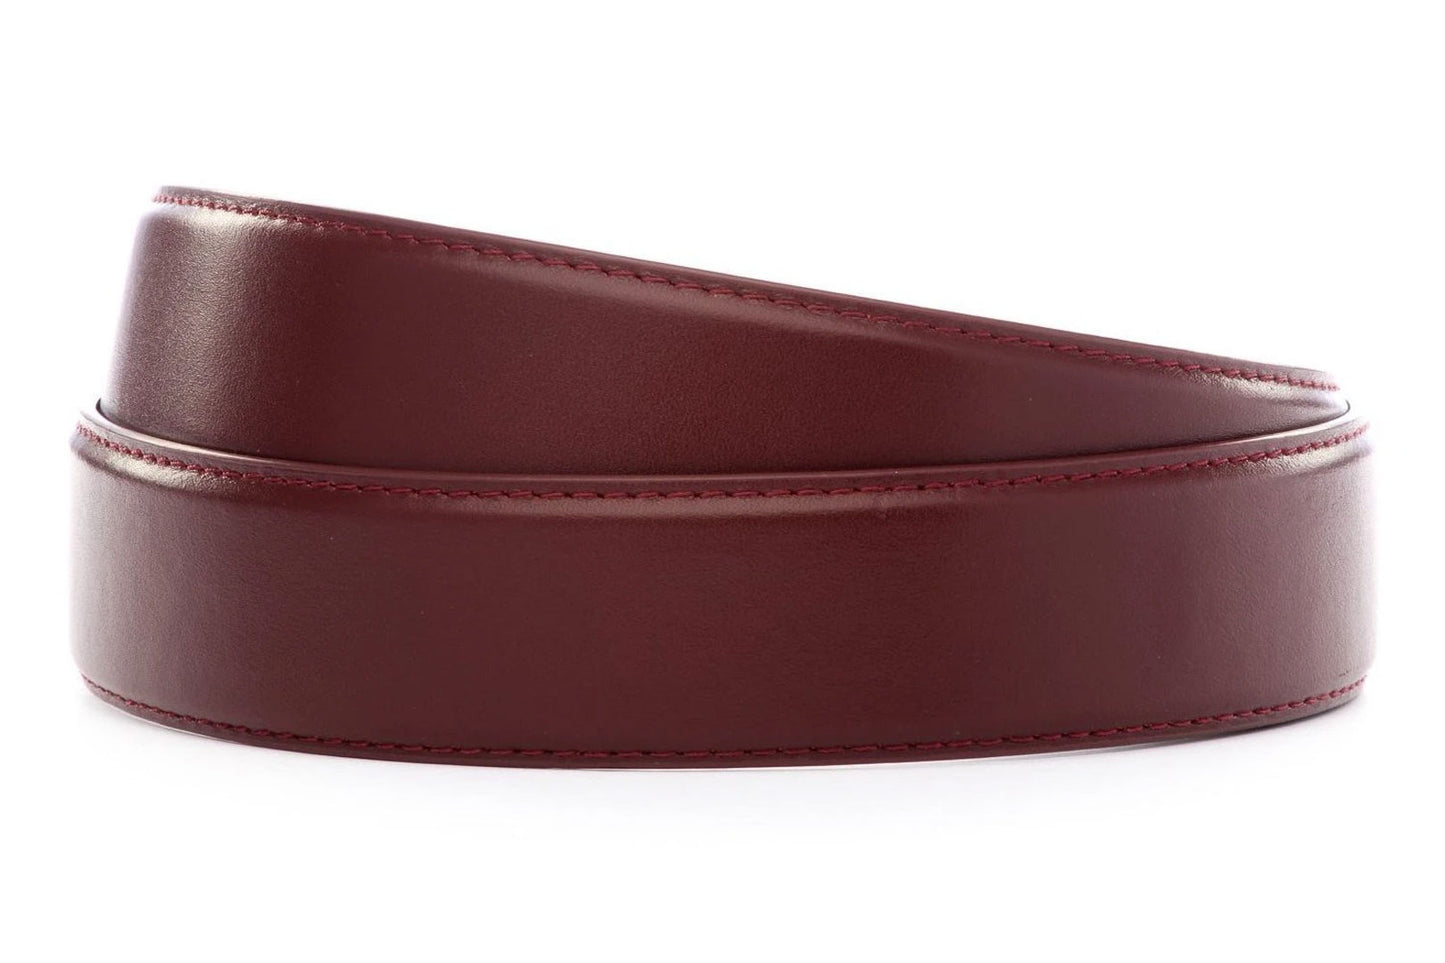 1.5" Cordovan Leather Strap - Anson Belt & Buckle